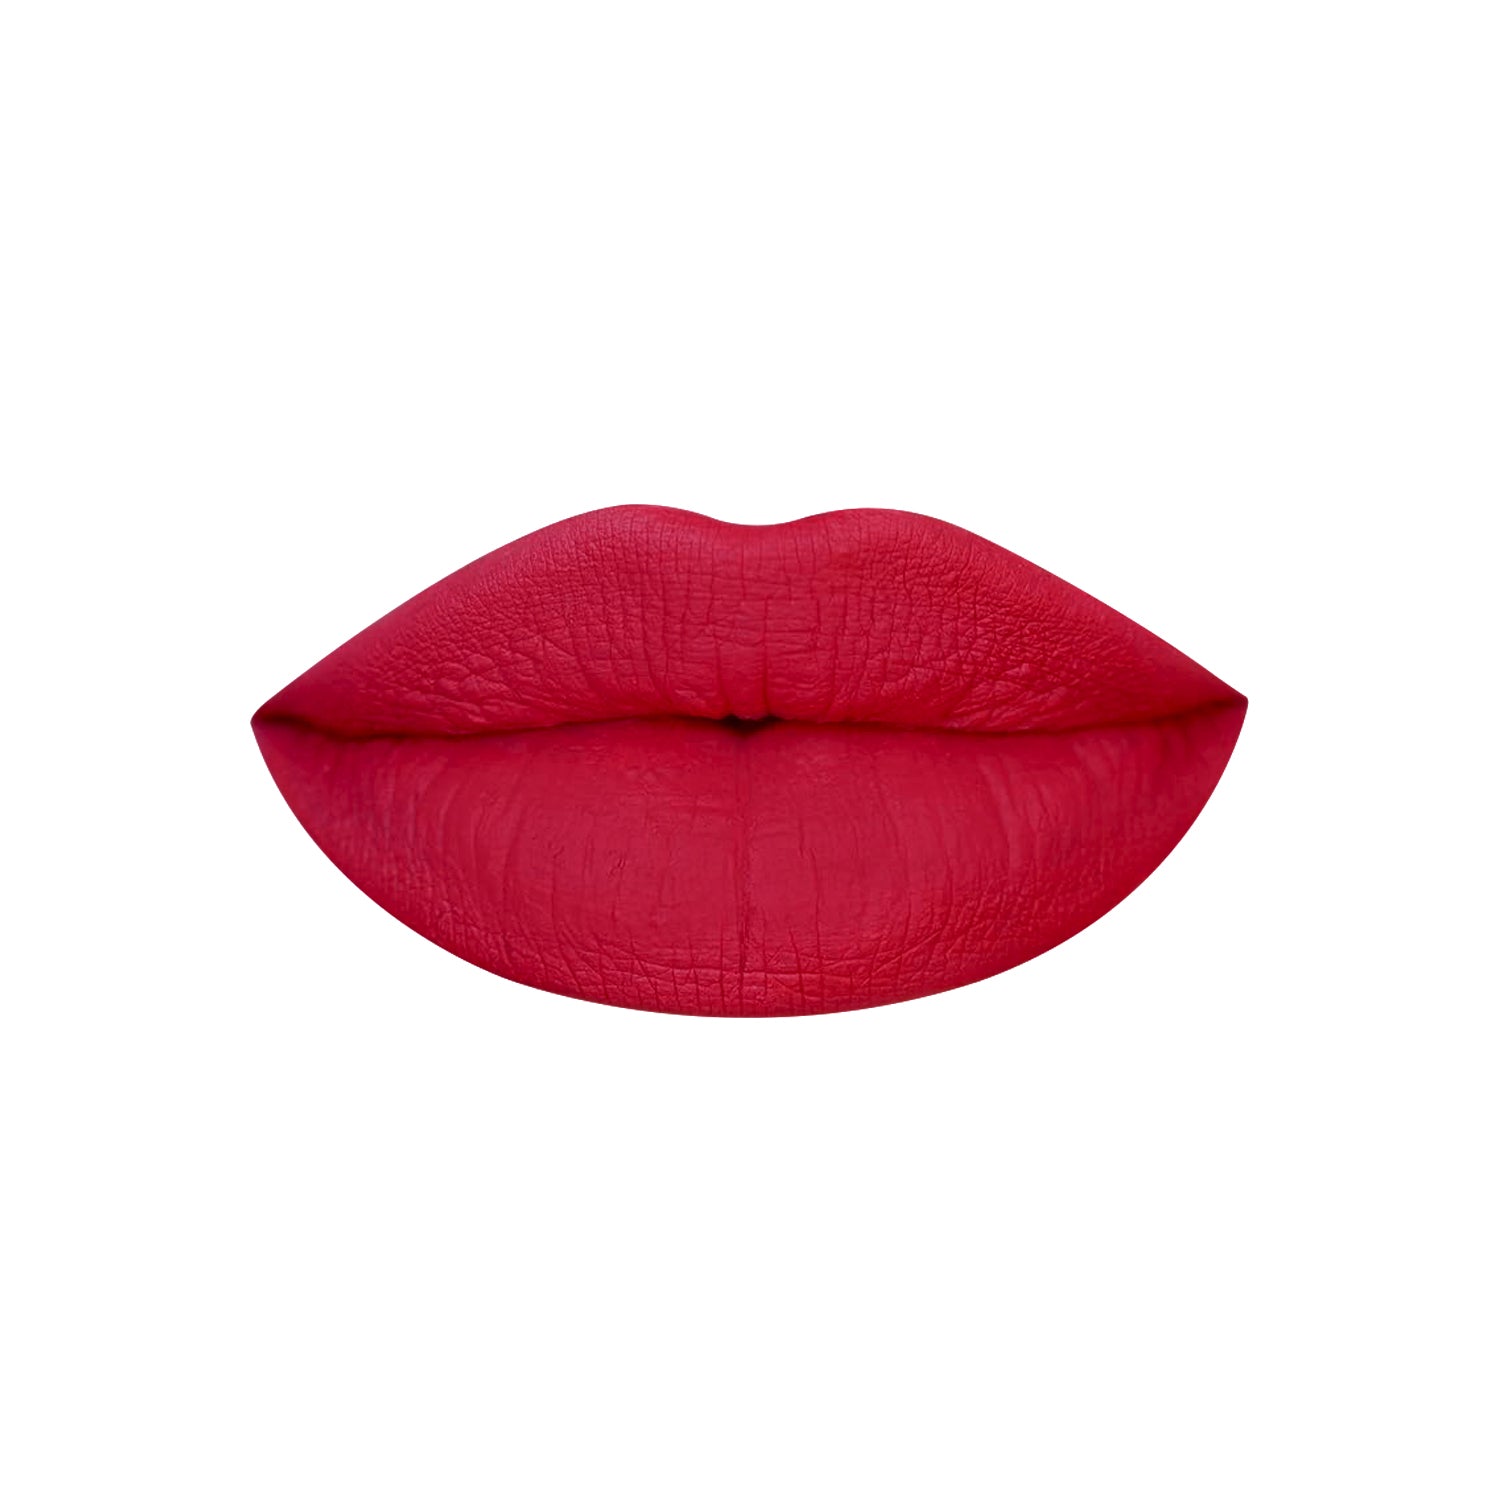 PAC Cosmetics Intimatte Lipstick (4g) #Color_Royale